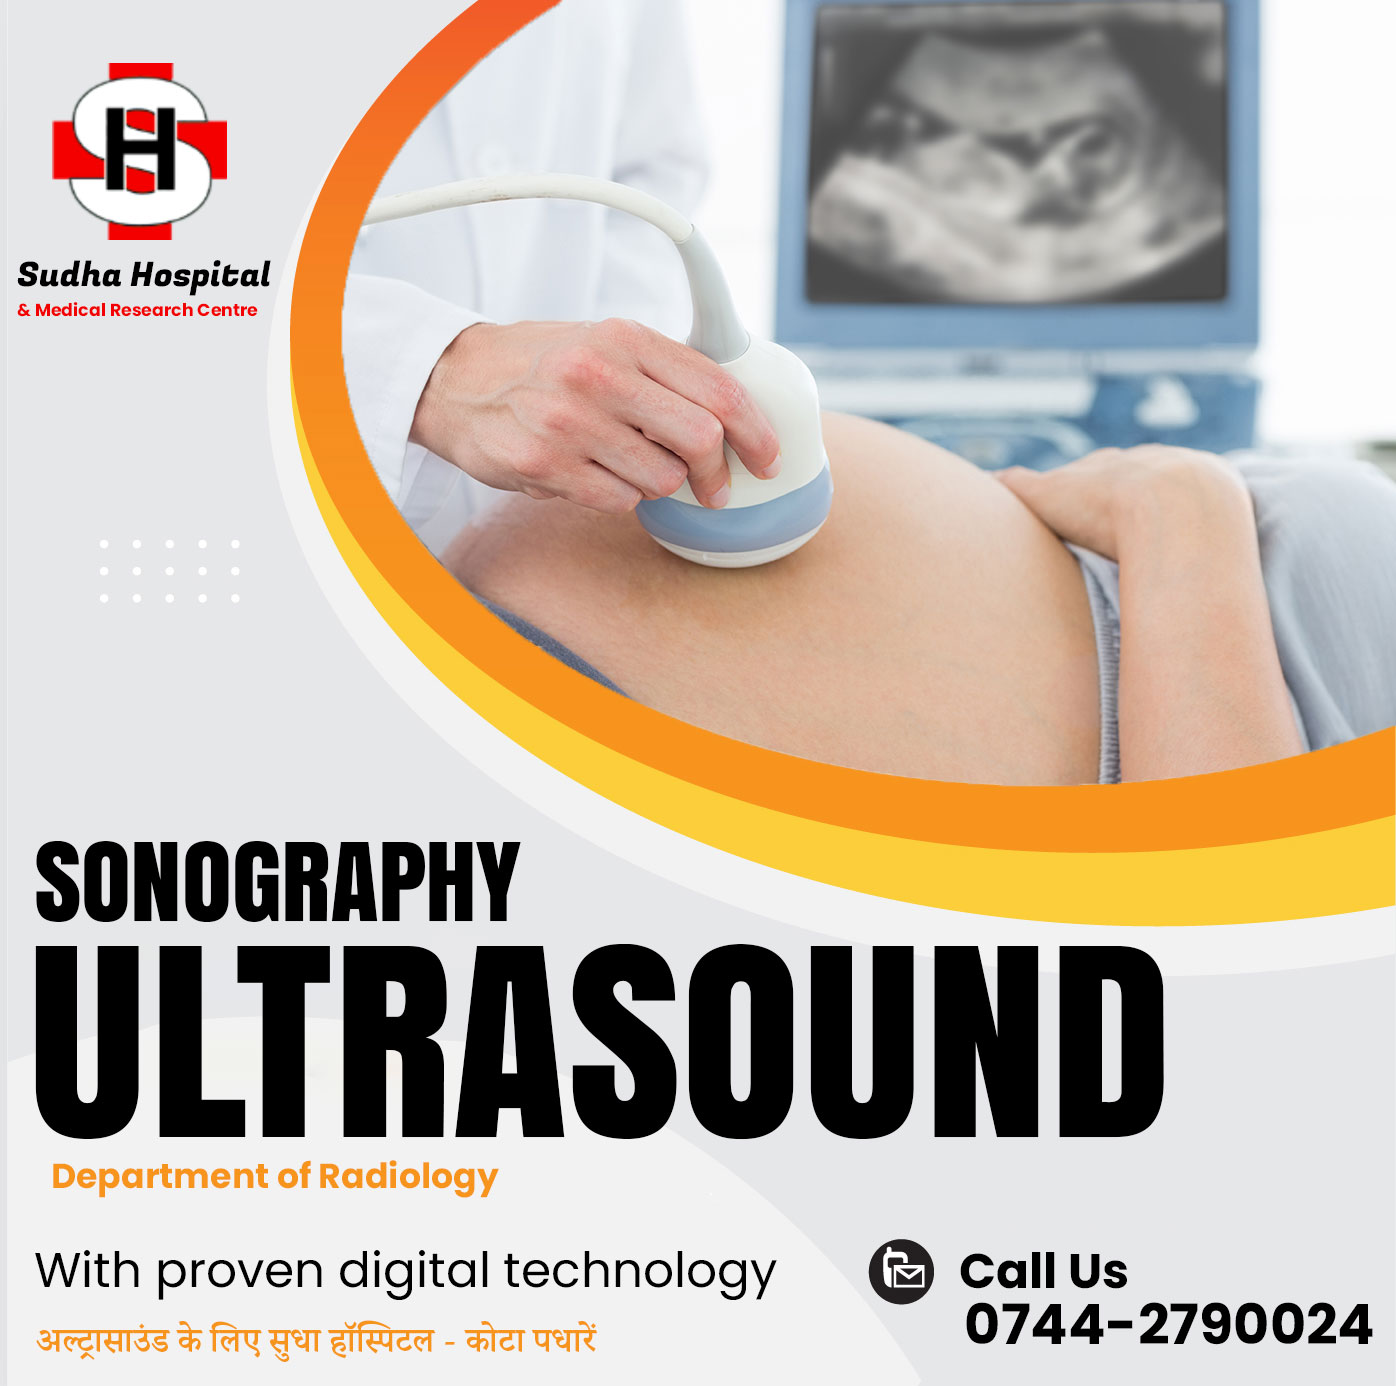 Best Ultrasound / Sonography Centre in Kota | Sudha Hospital & Medical Research Centre - Kota